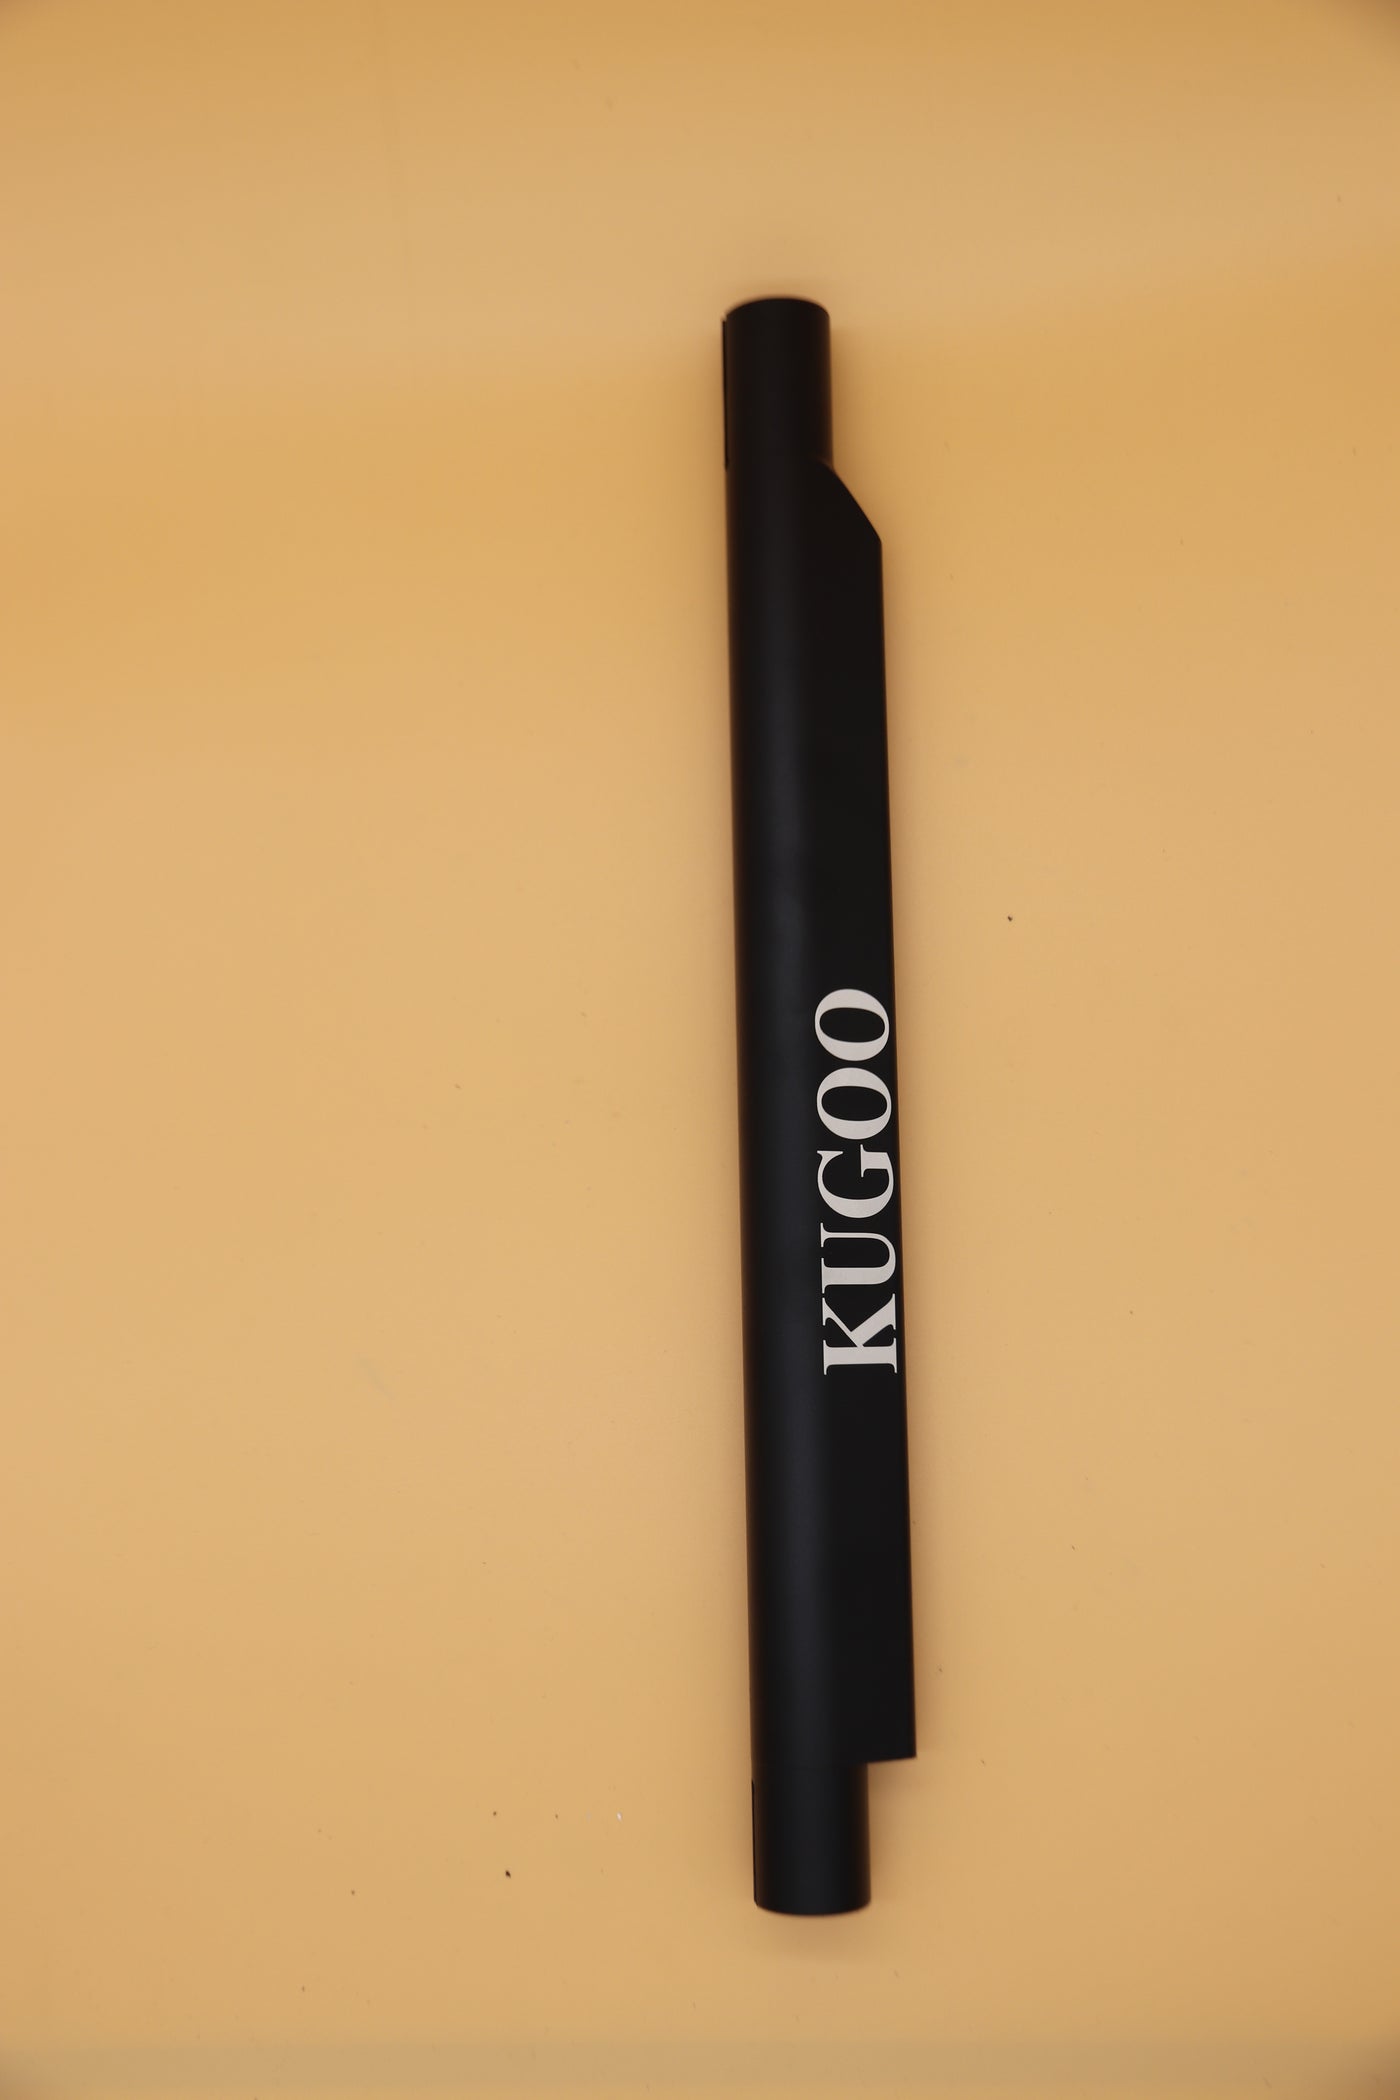 KUGOO Electric Scooter Stem/Flat tube/Steering Pole/Steertube